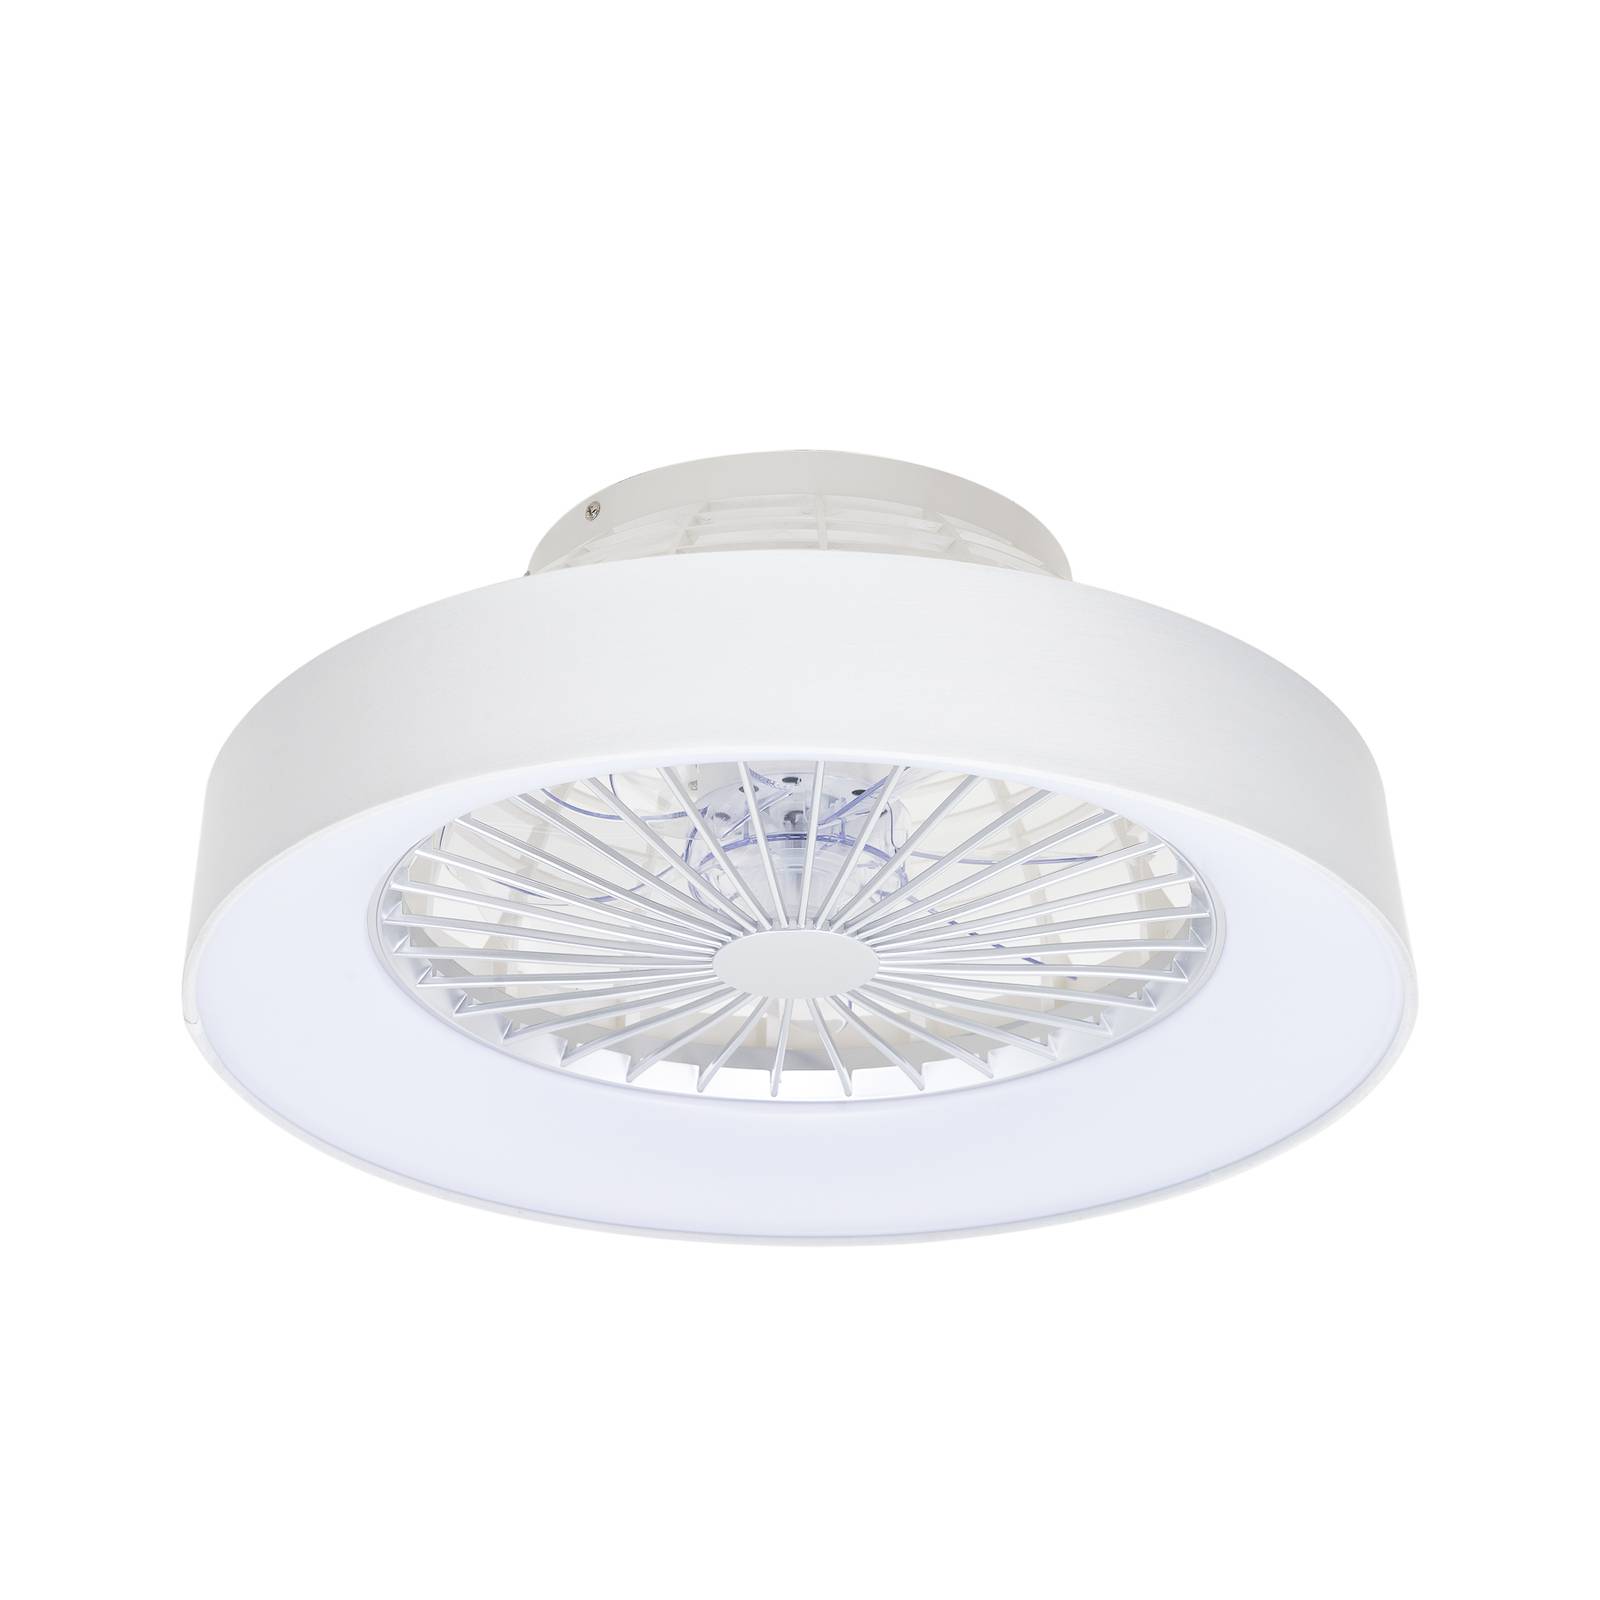 Starluna Circuma LED mennyezeti ventilátor, fehér